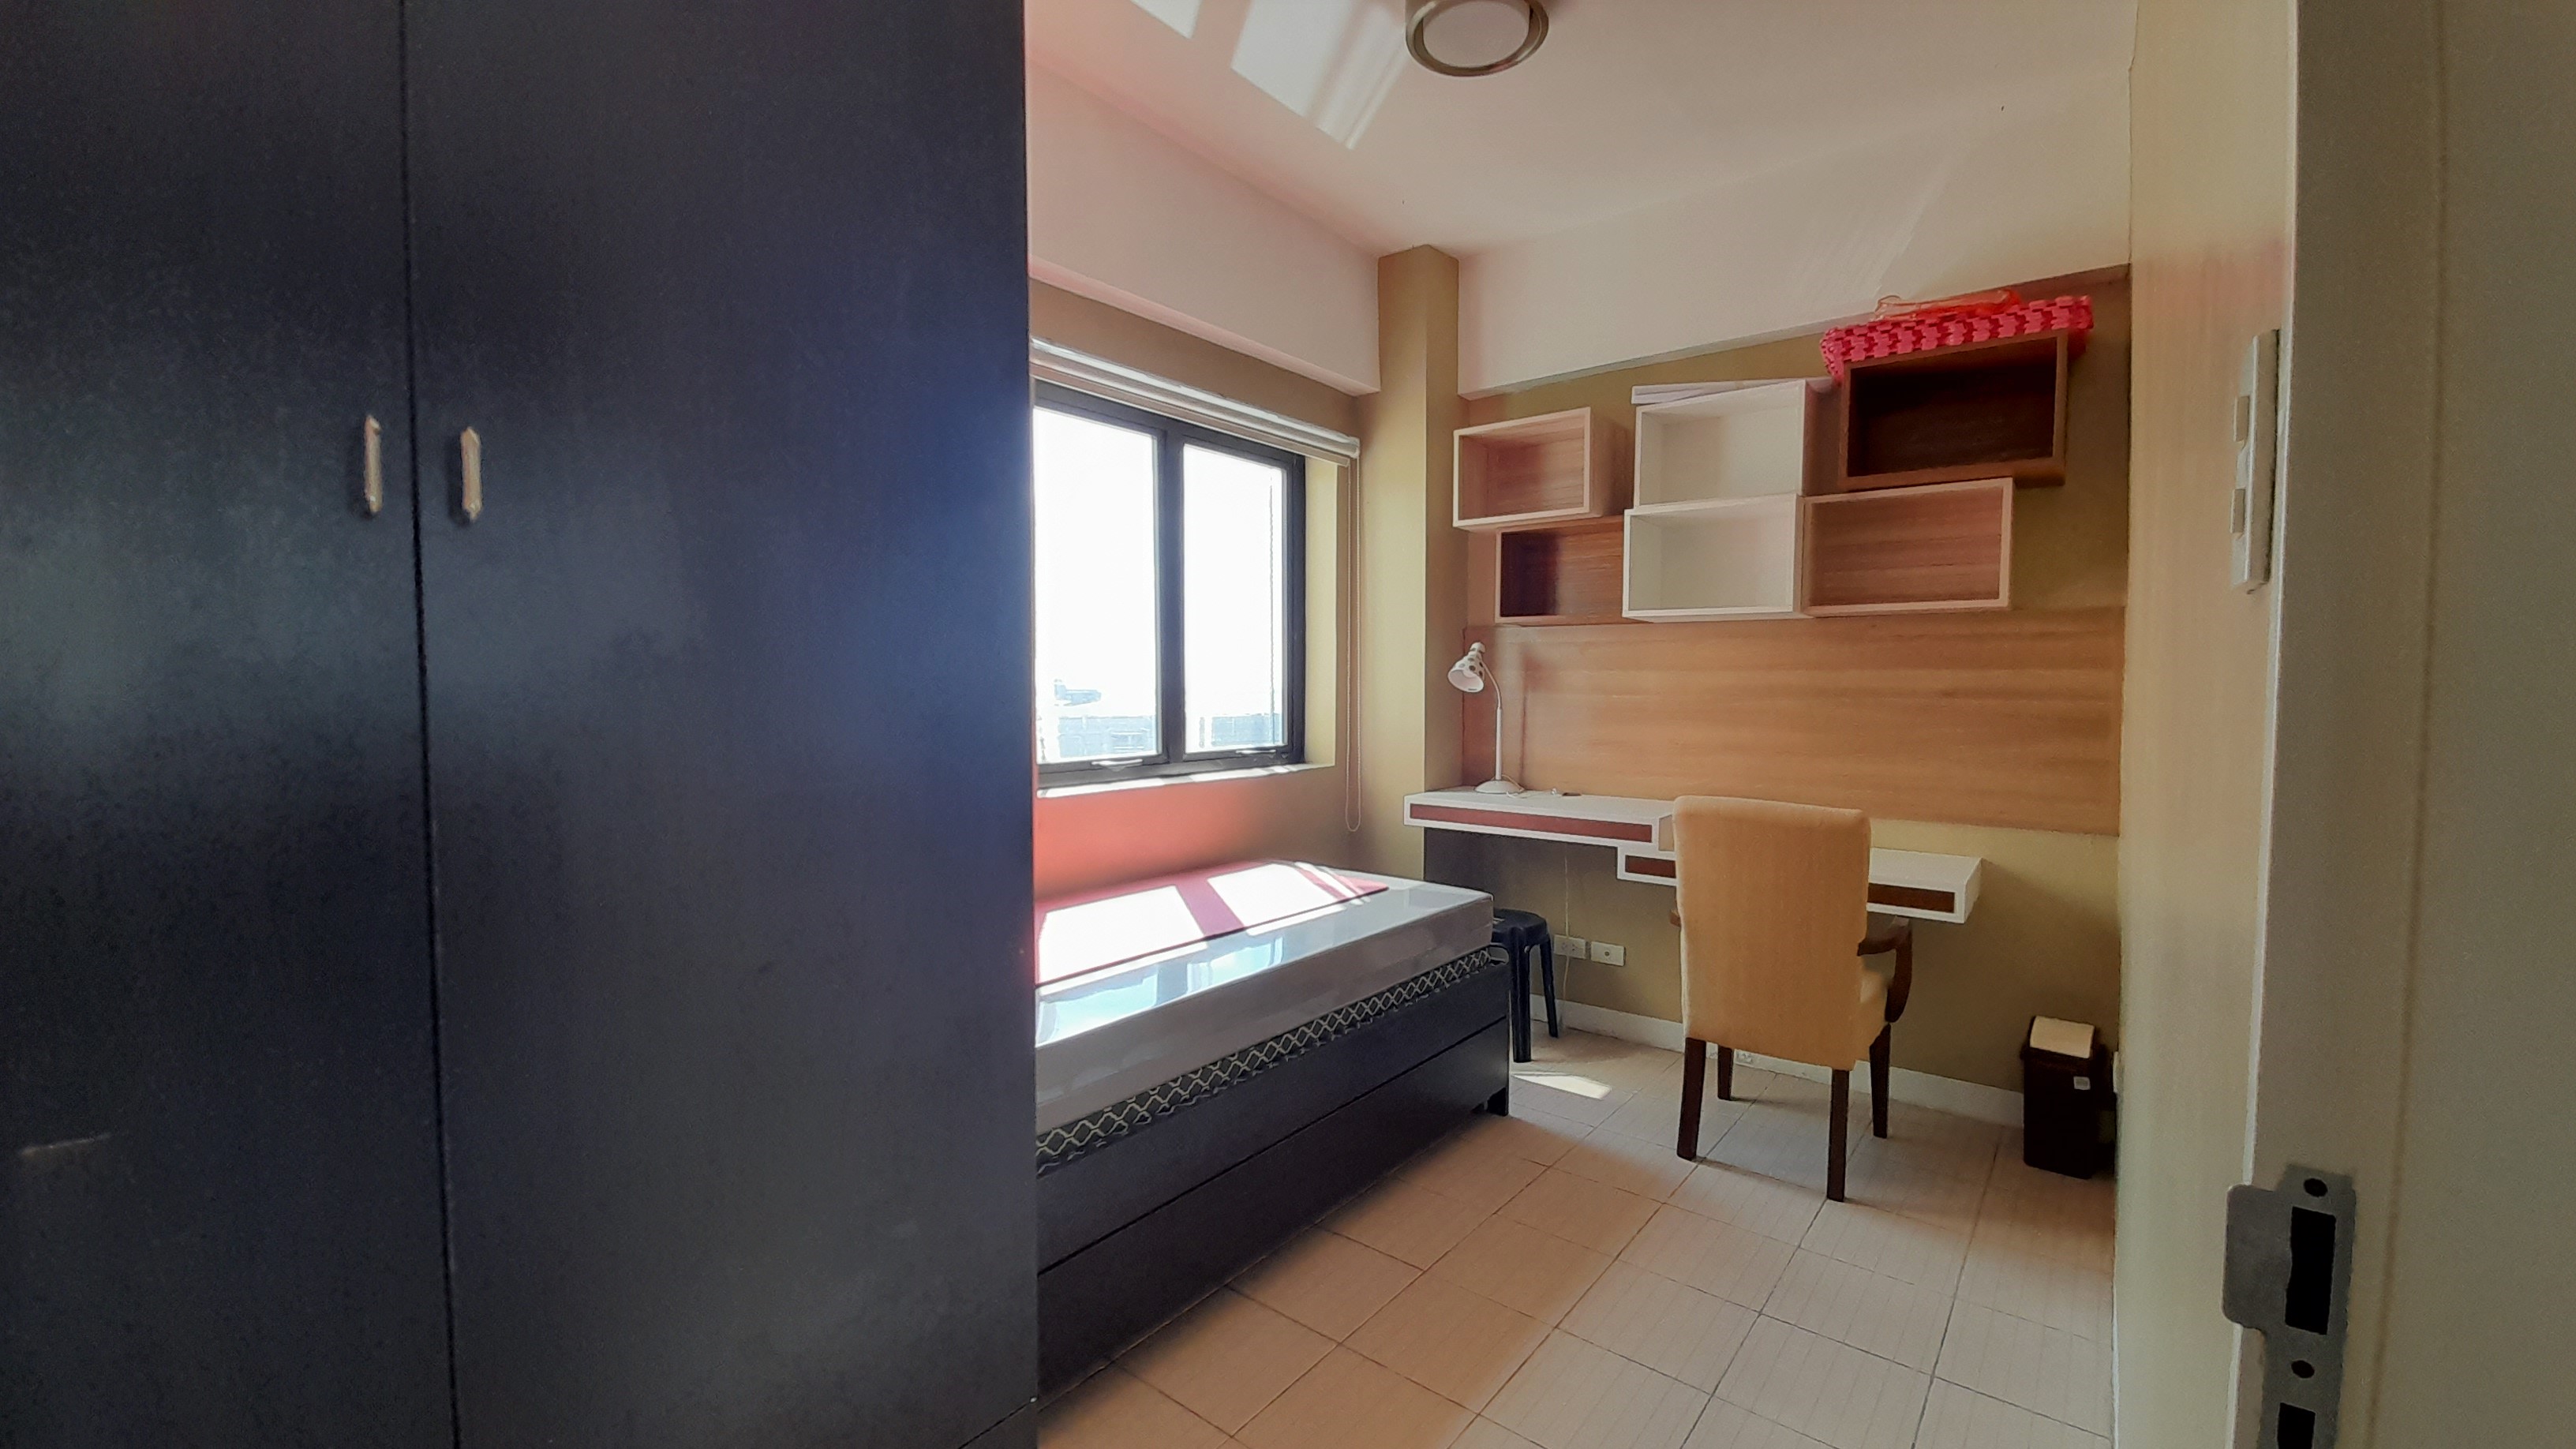 2-bedroom-furnished-condominium-in-mabolo-cebu-city-cebu